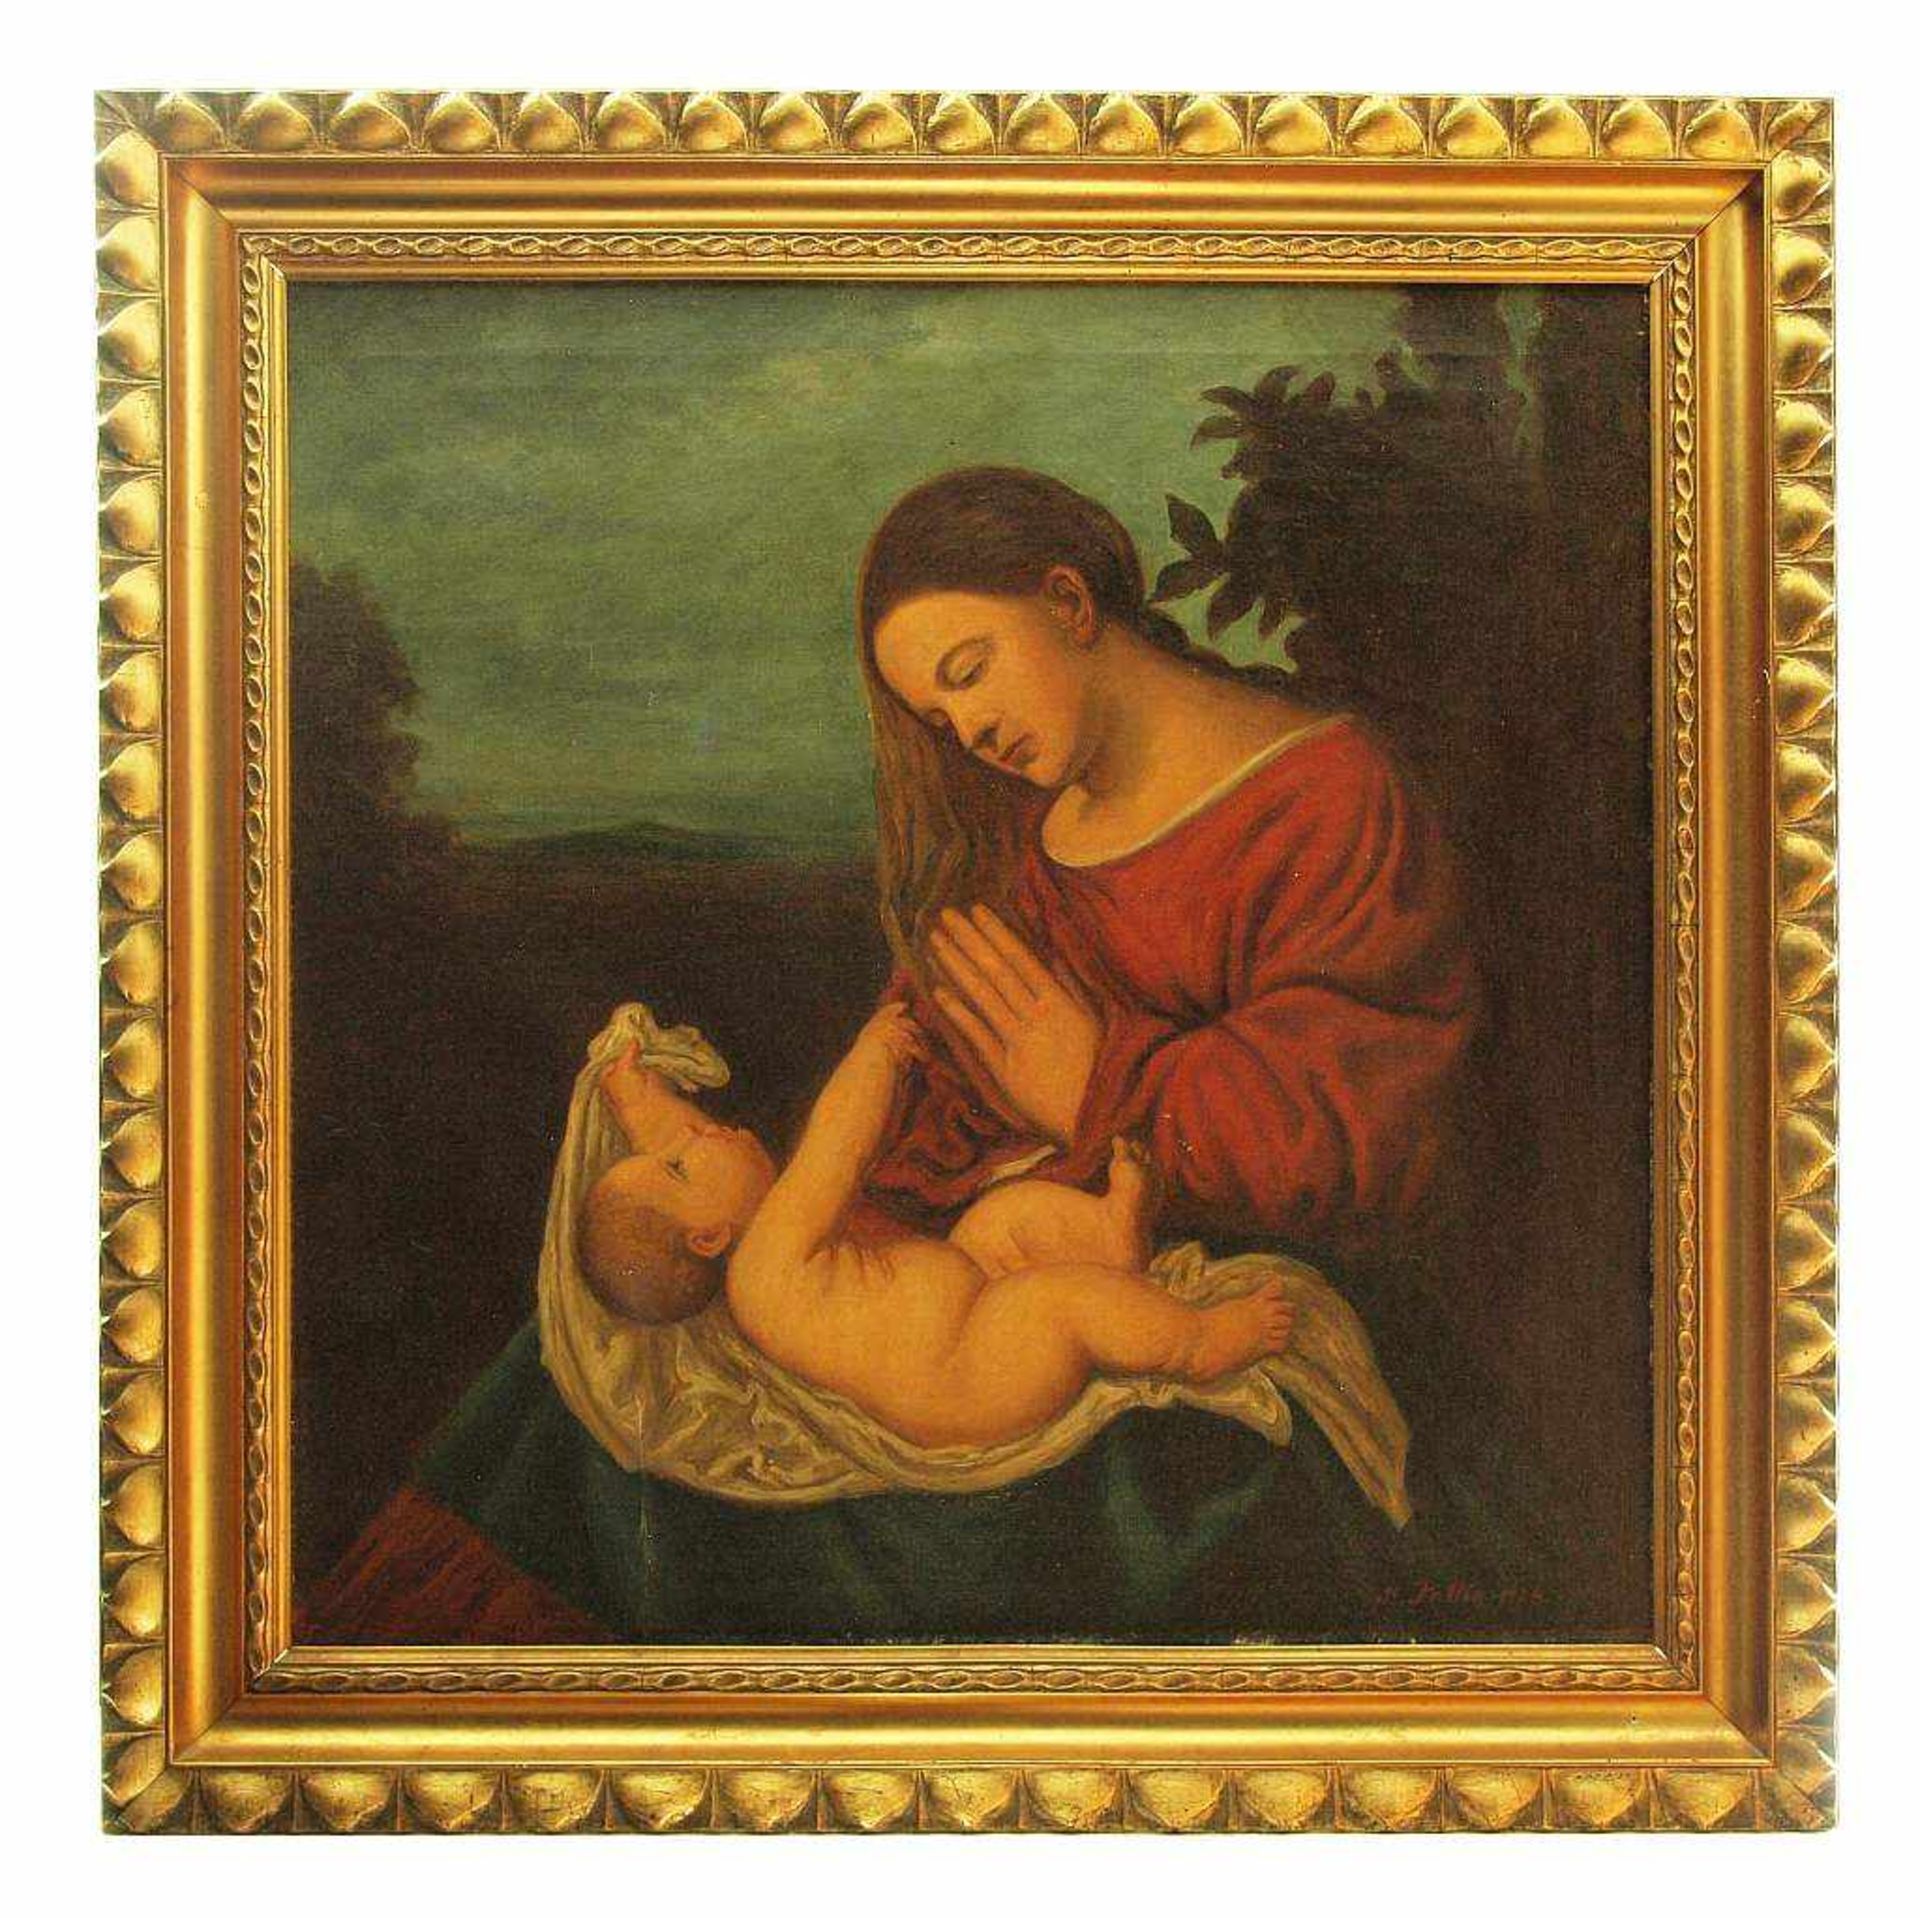 Maler 19. Jahrhundert. PELTIN, R Maler 19. Jahrhundert. Maria mit Kind. Öl auf Leinwand. partielle - Bild 3 aus 5